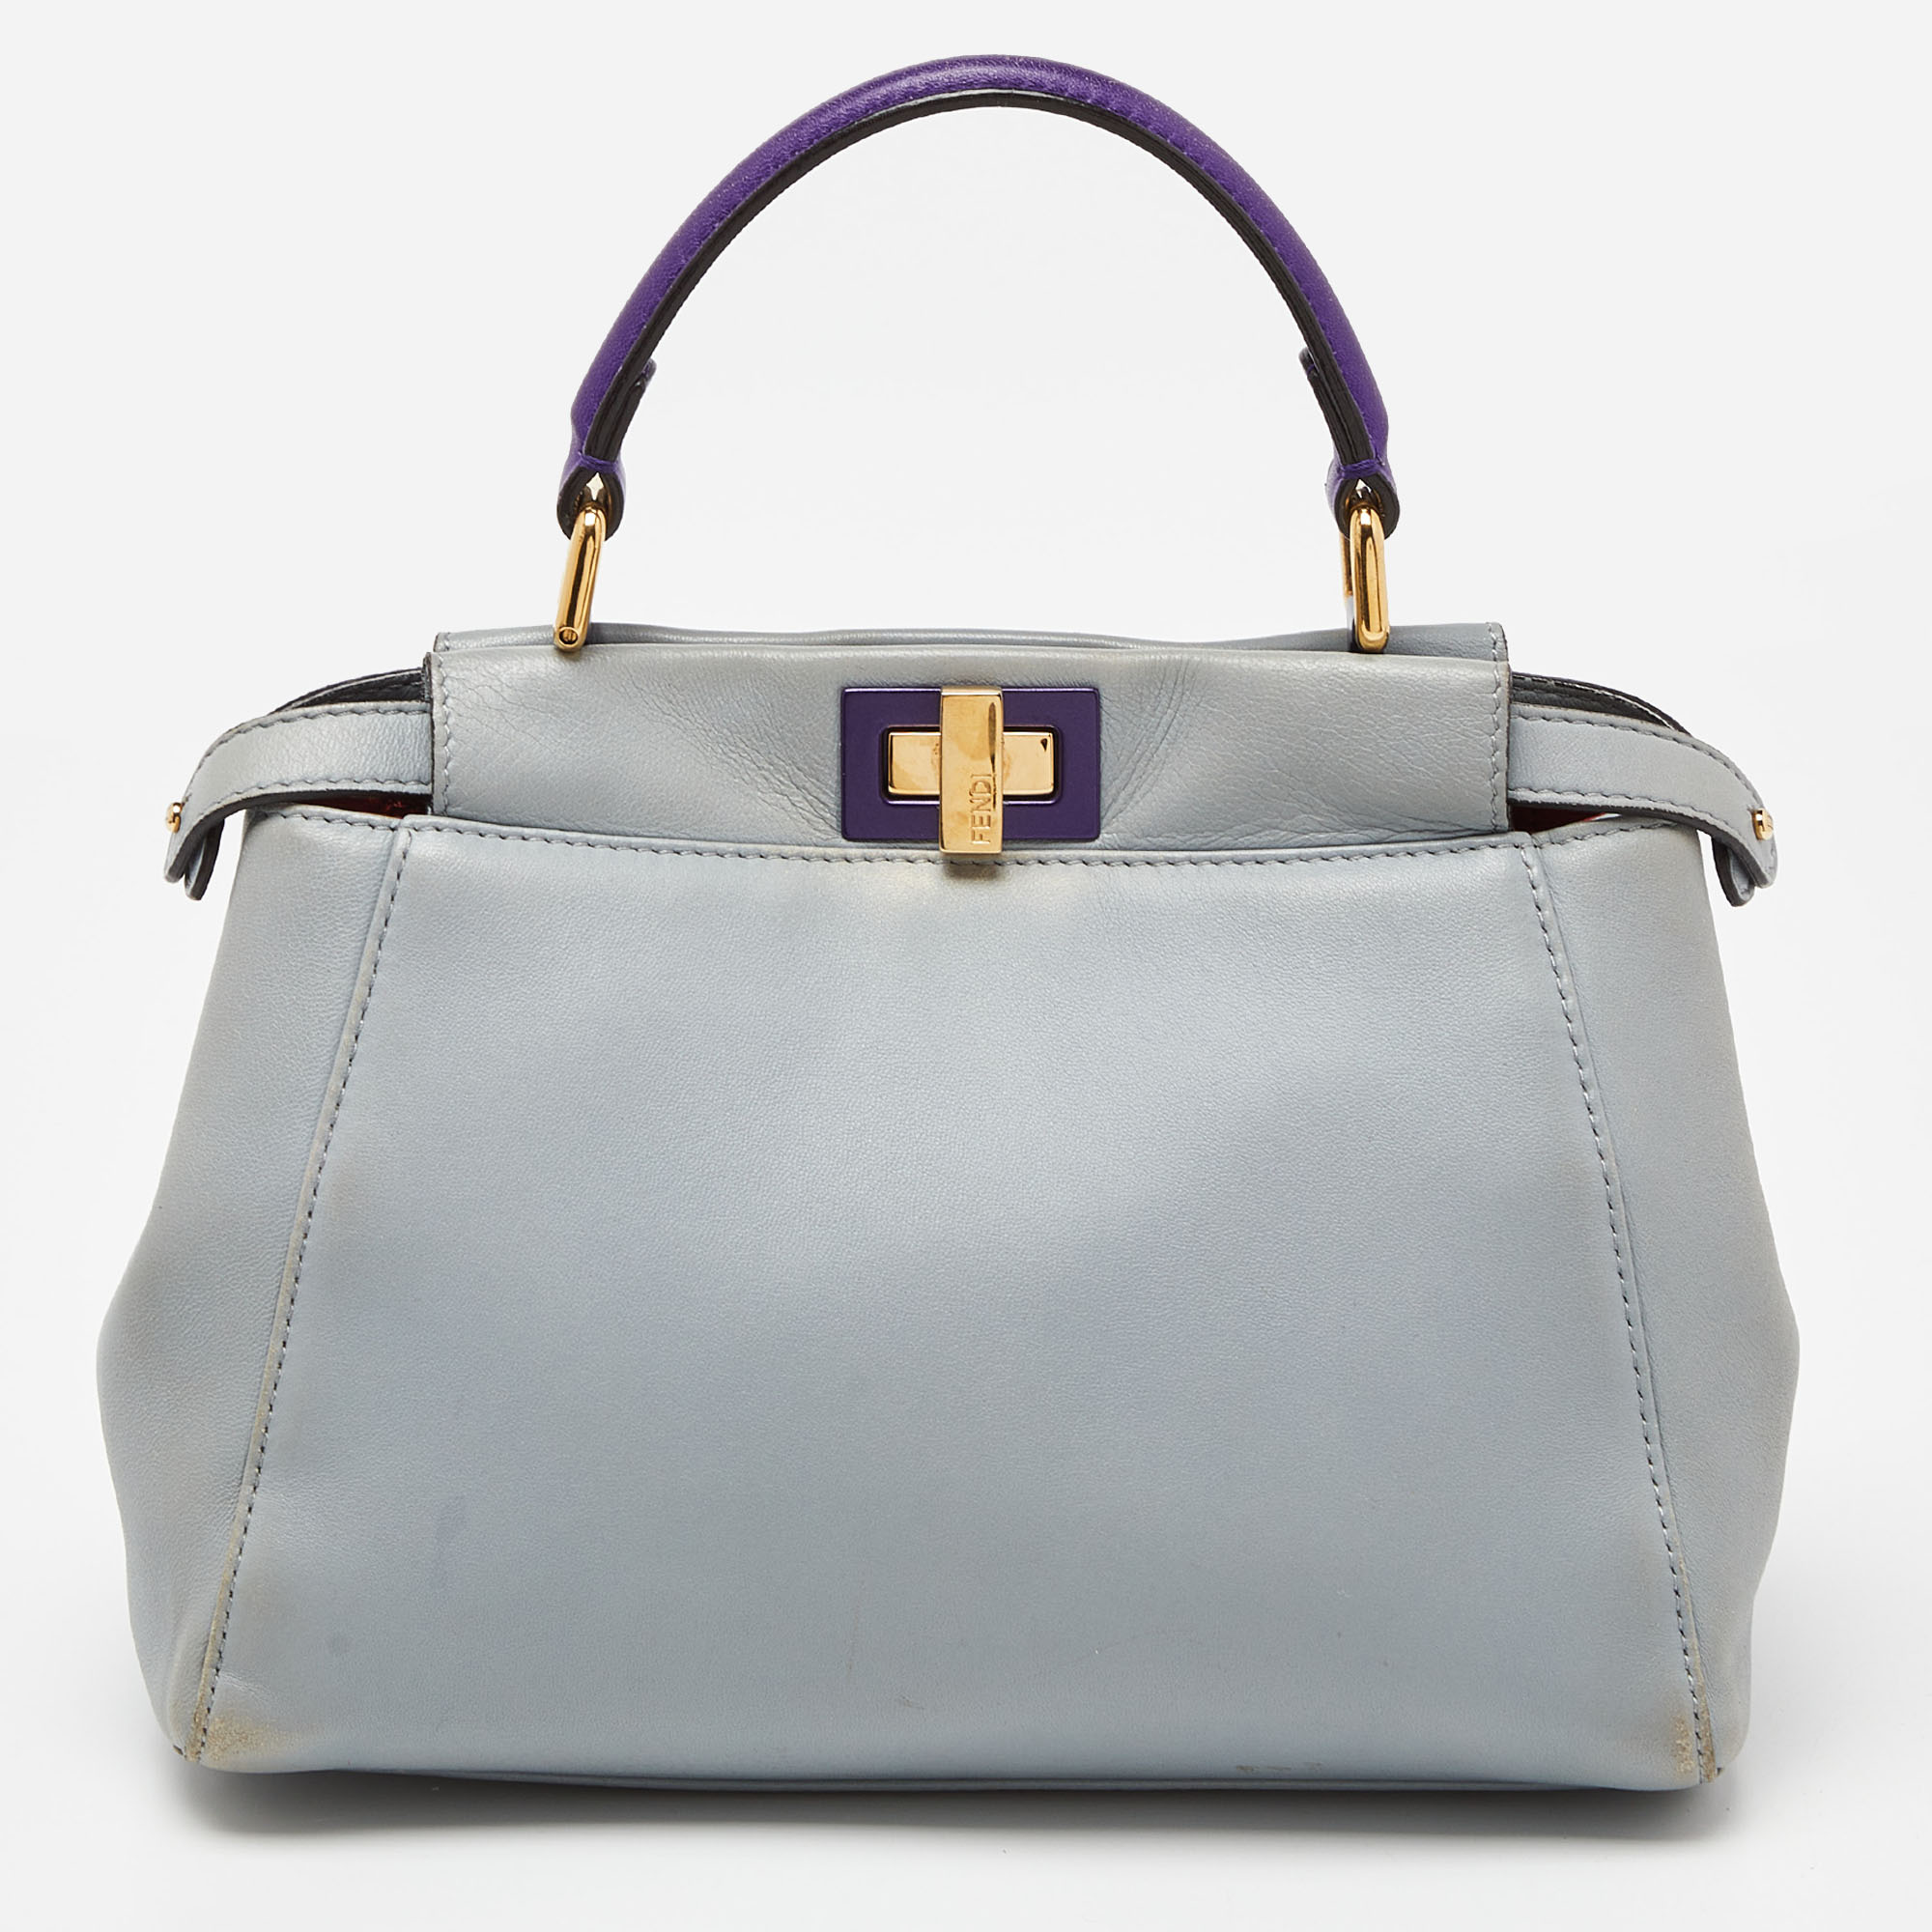 Fendi Blue/Purple Leather Mini Peekaboo Top Handle Bag